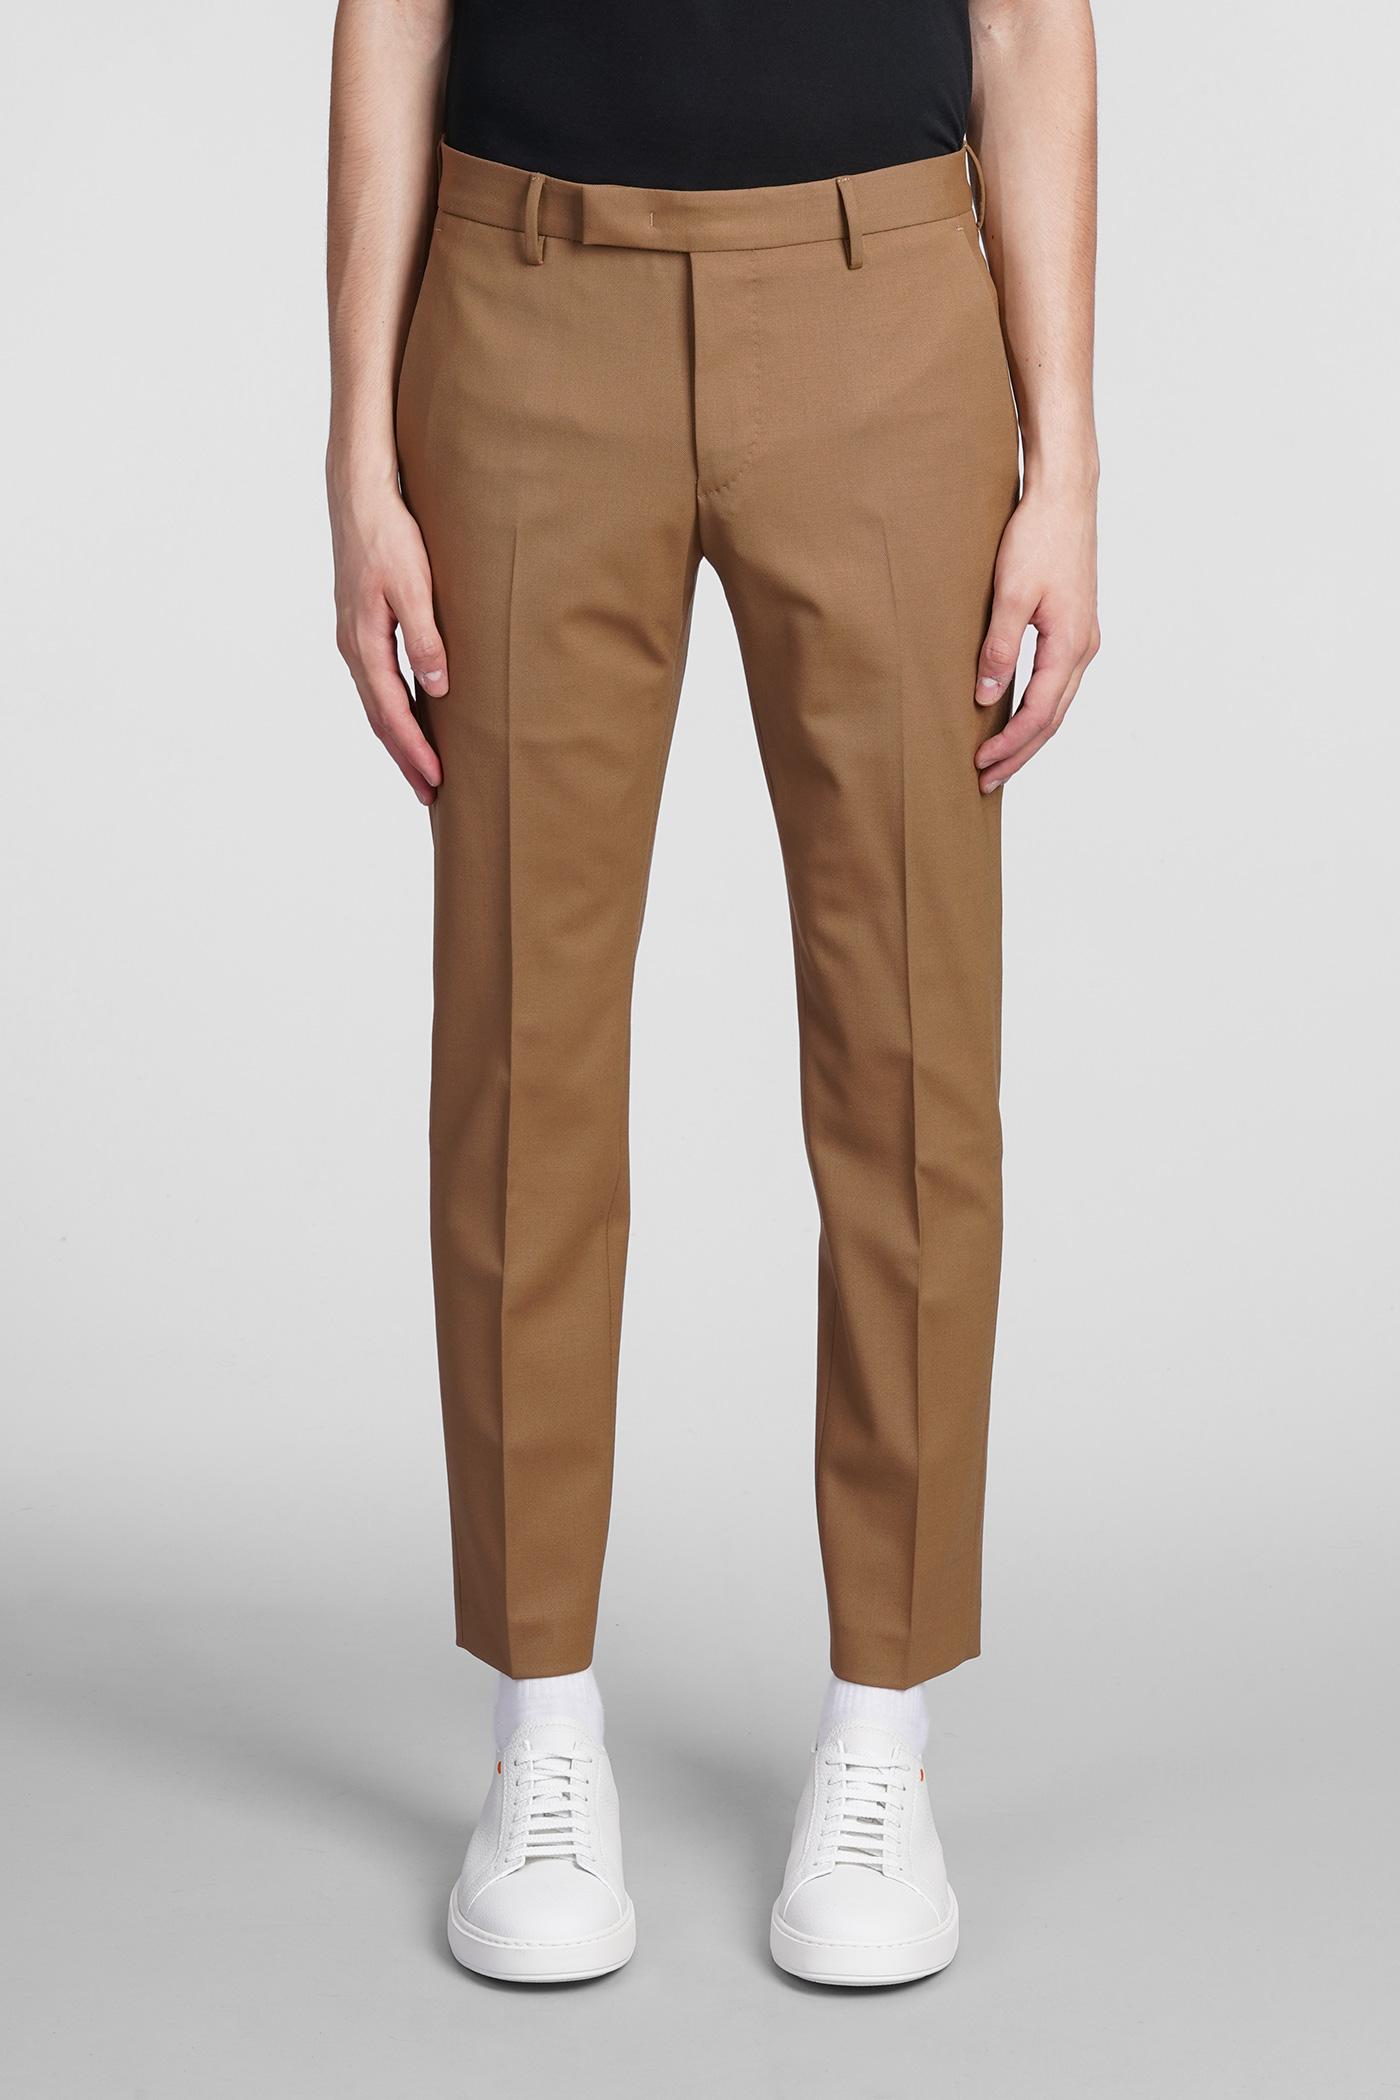 PT Pantaloni Torino Pants In Camel Wool in Brown for Men | Lyst